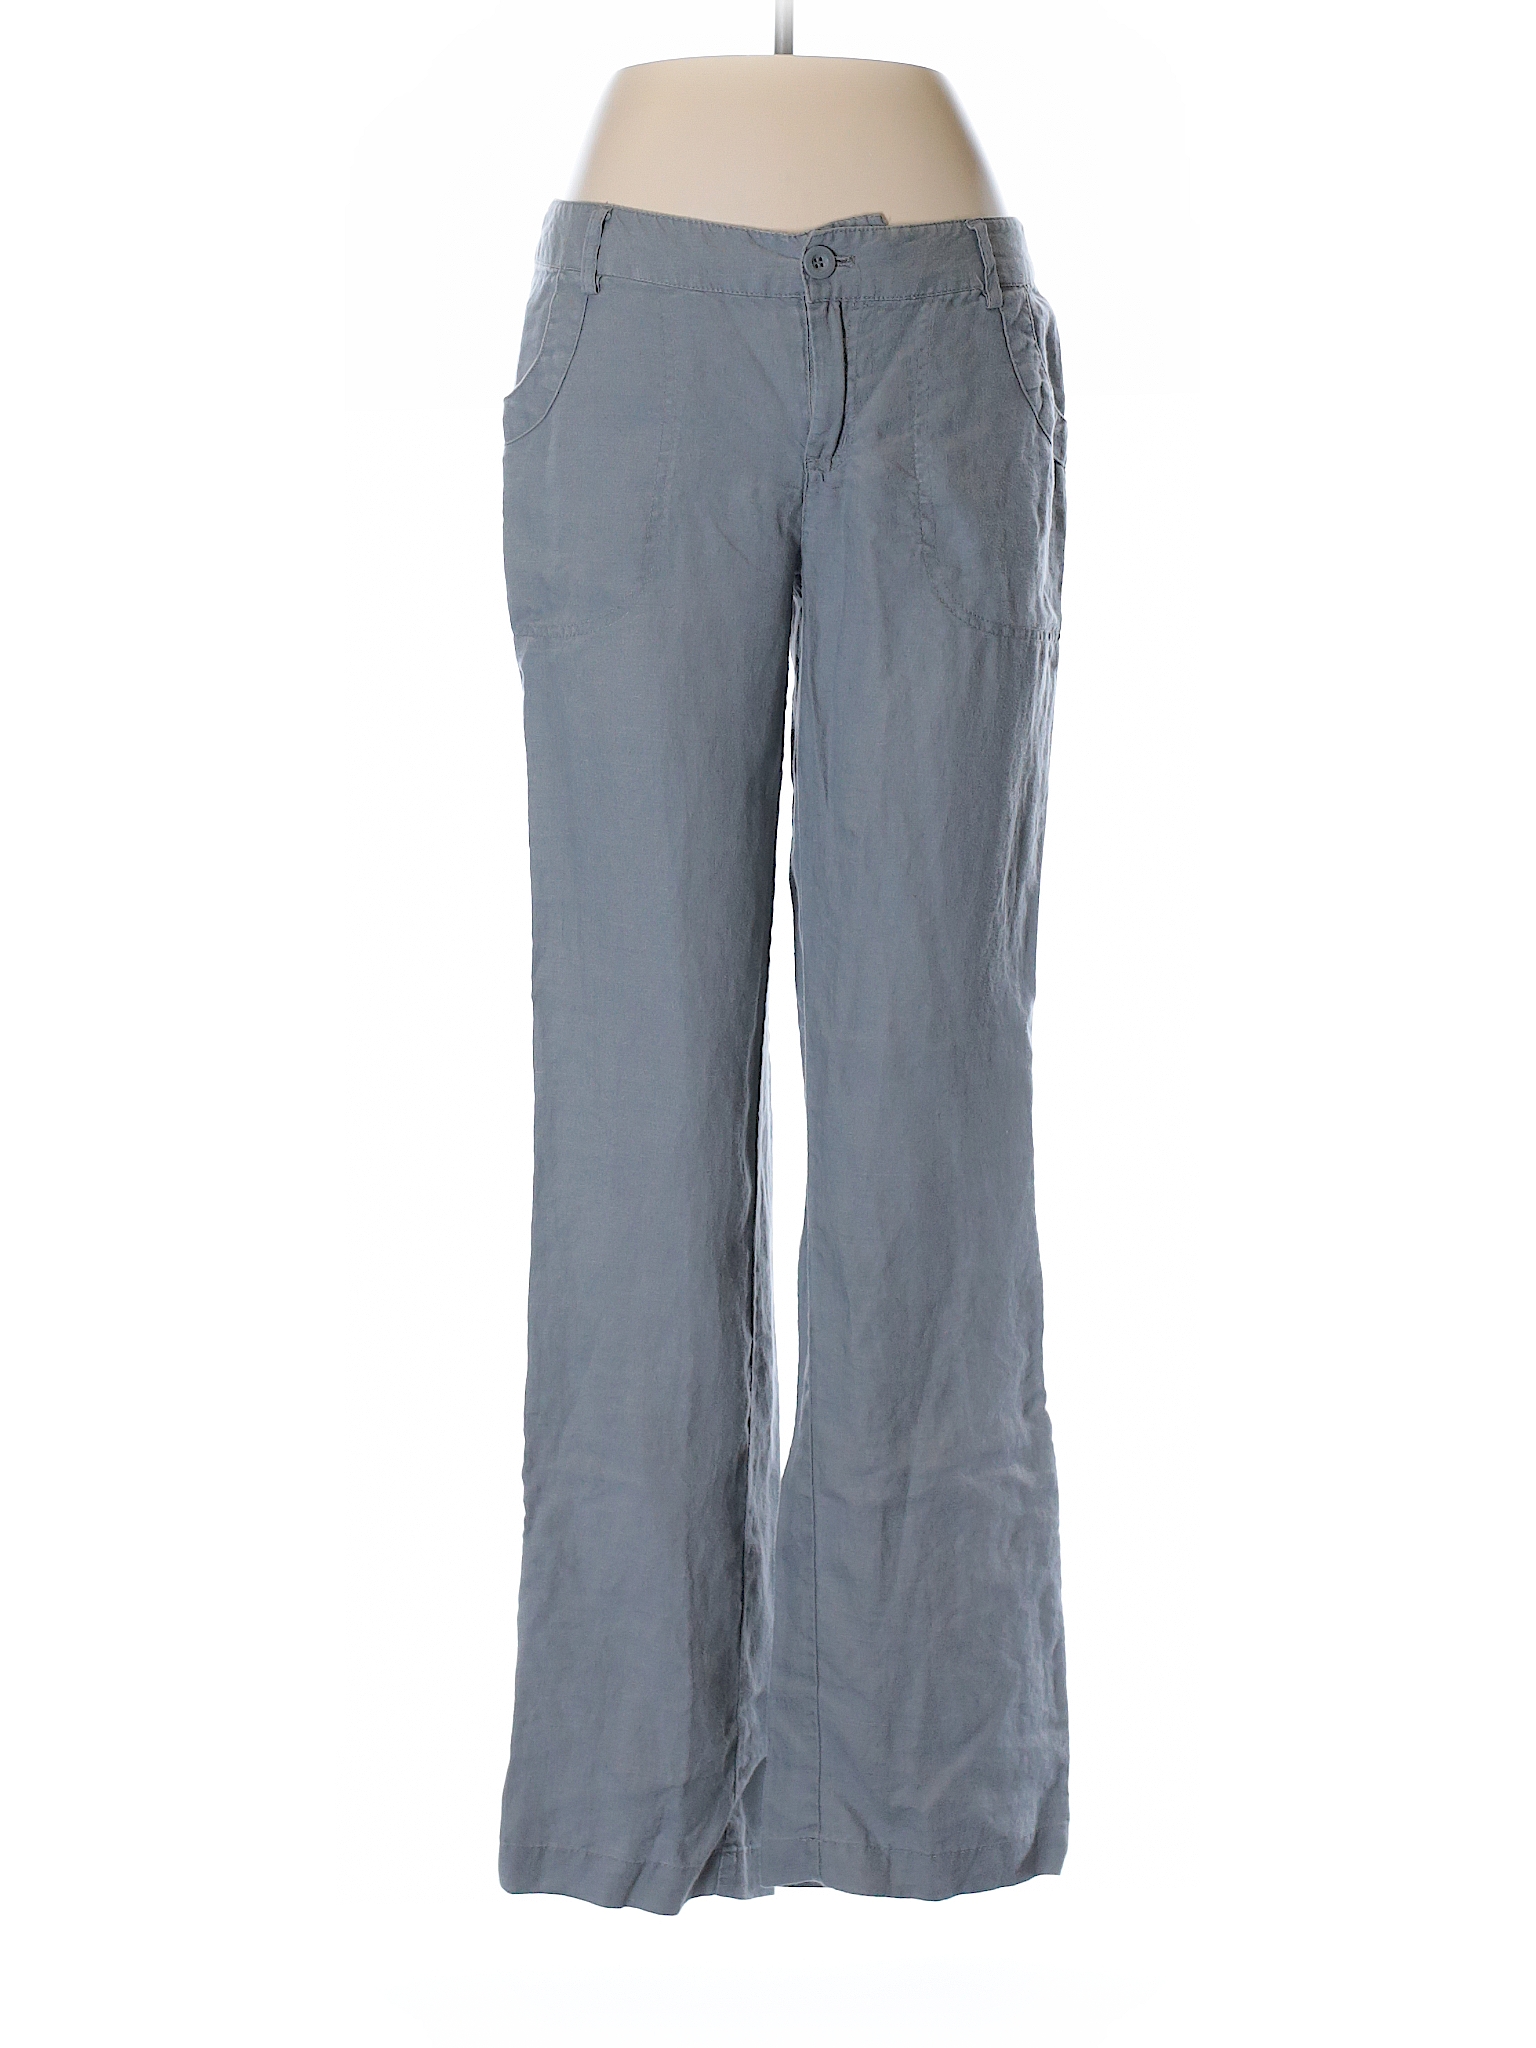 Cynthia Rowley TJX 100% Linen Solid Gray Linen Pants Size 4 - 96% off ...